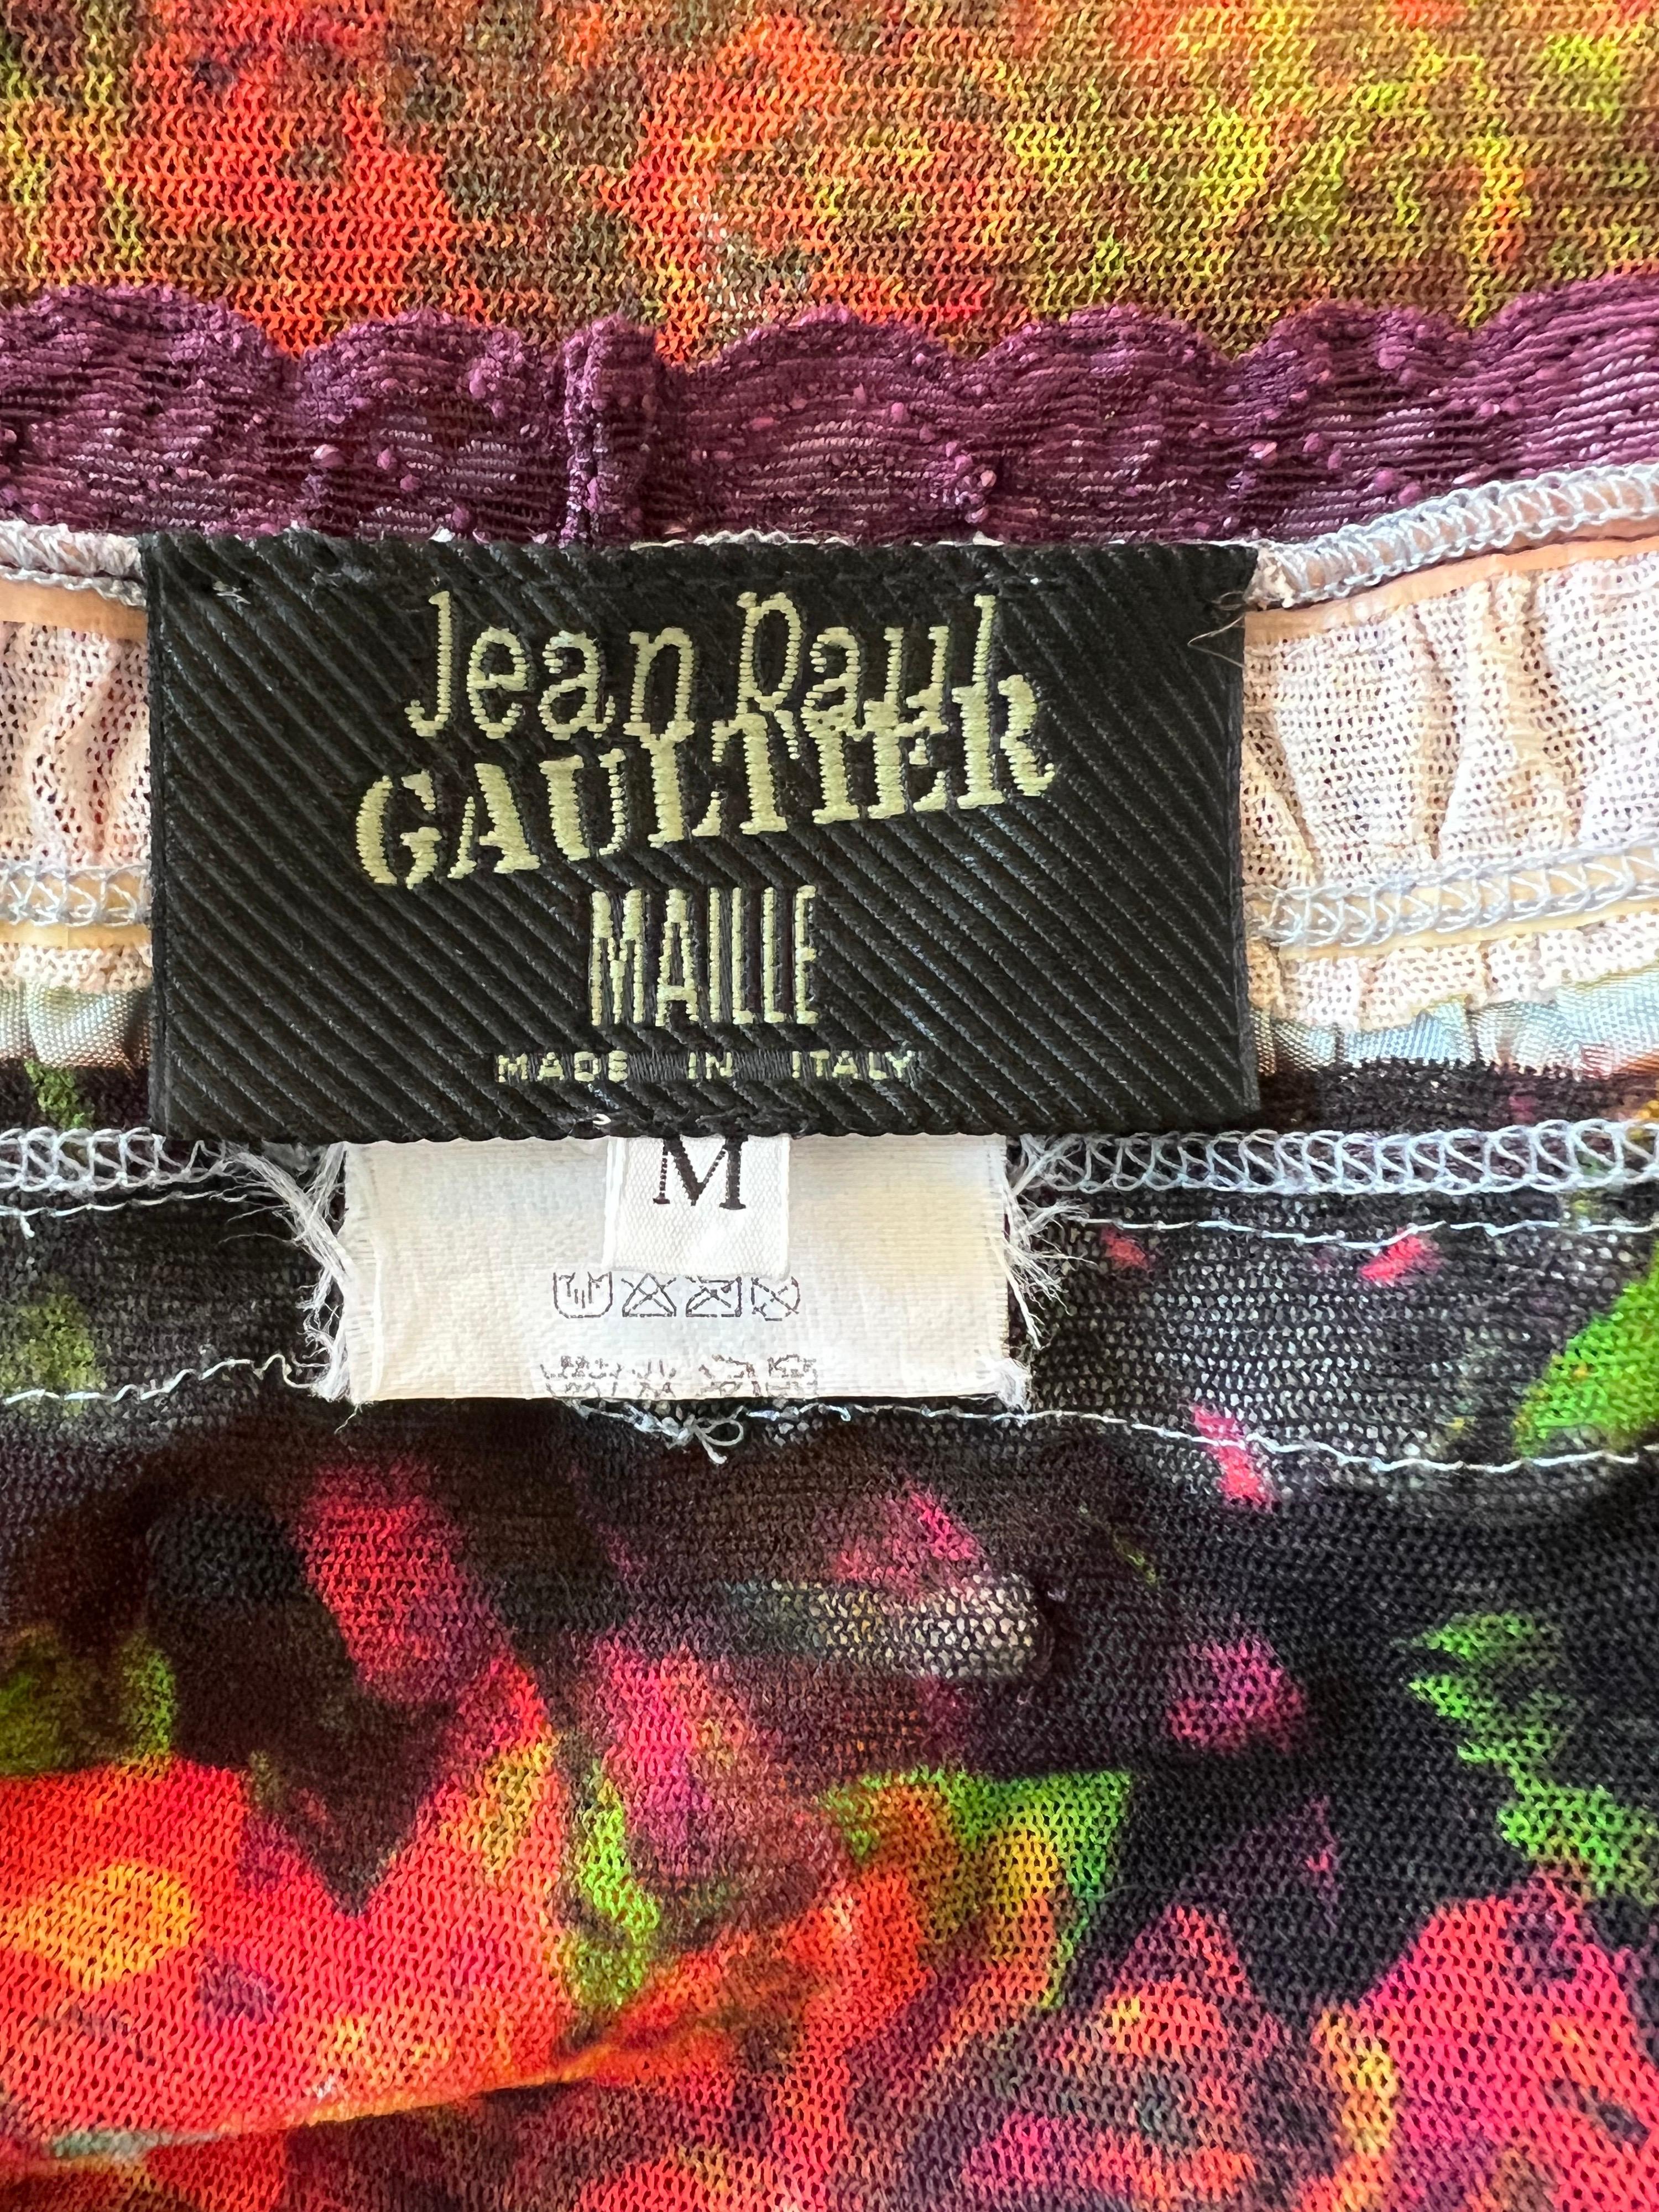 Black Jean Paul Gaultier S/S 2000 Vintage Psychedelic Semi-Sheer Mesh Dress  For Sale